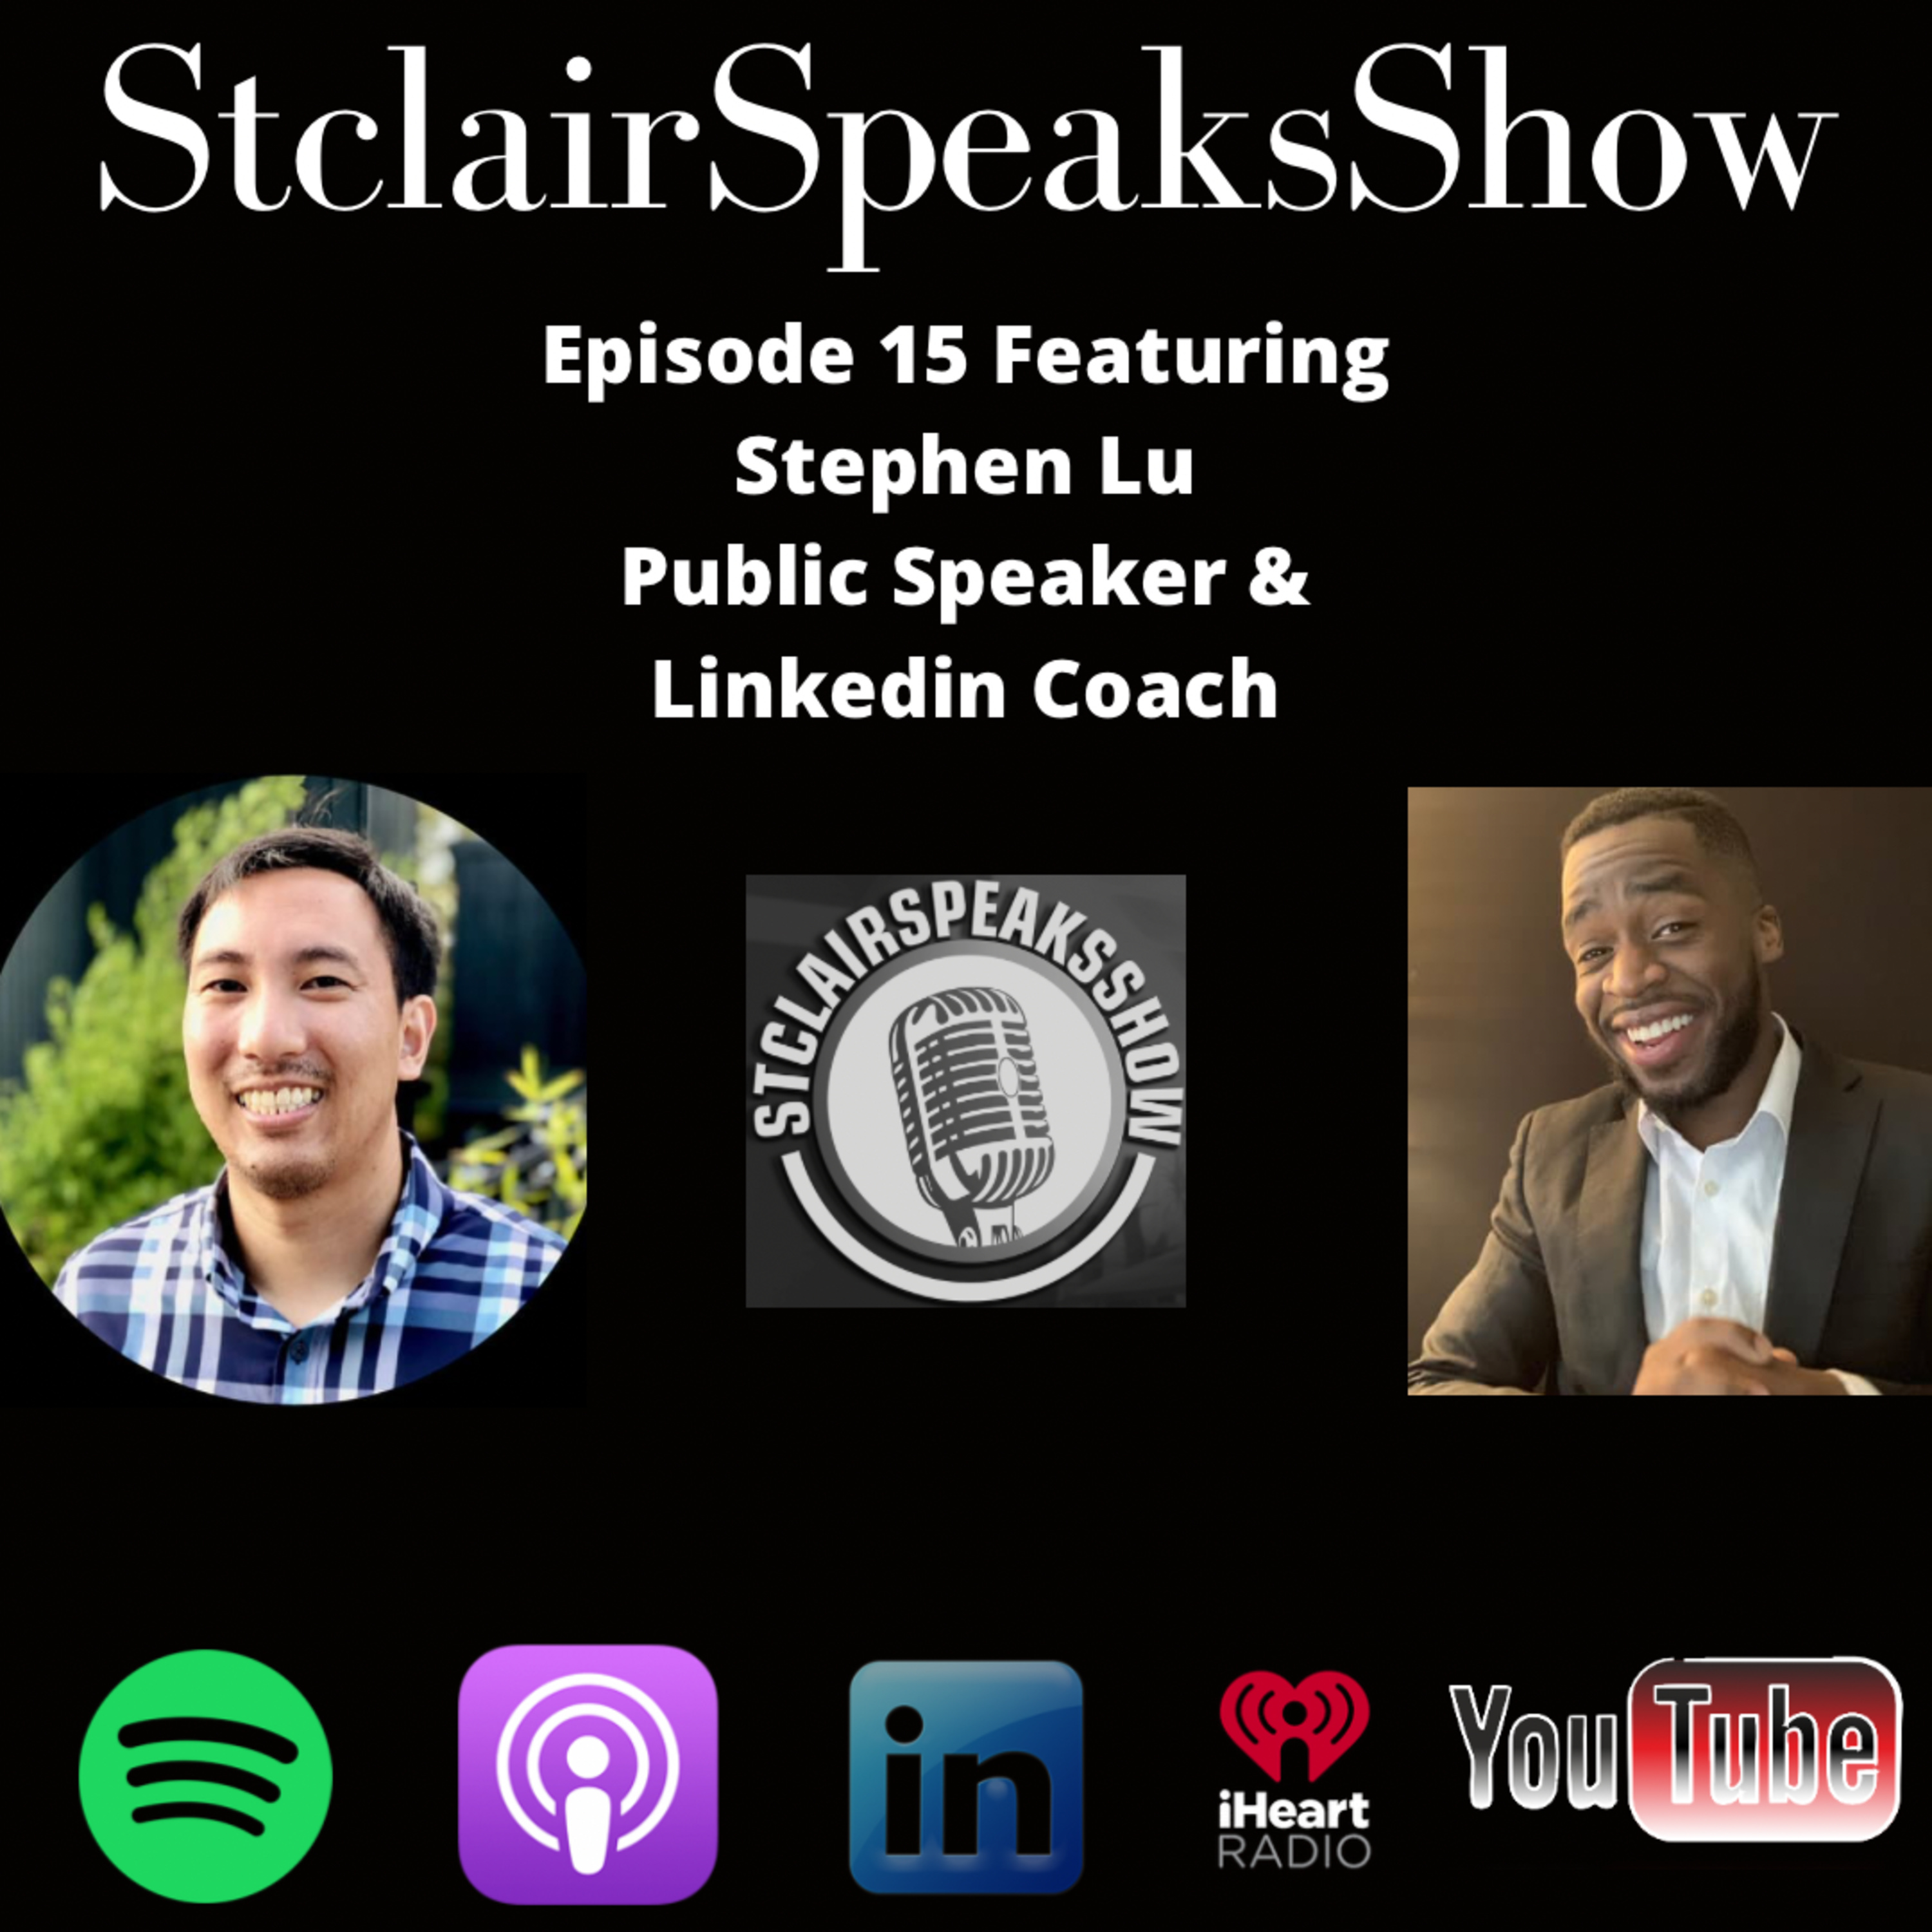 The StClairSpeaks Show Episode 15 Featuring Stephen Lu Public Speakser & Linkedin Coach Image